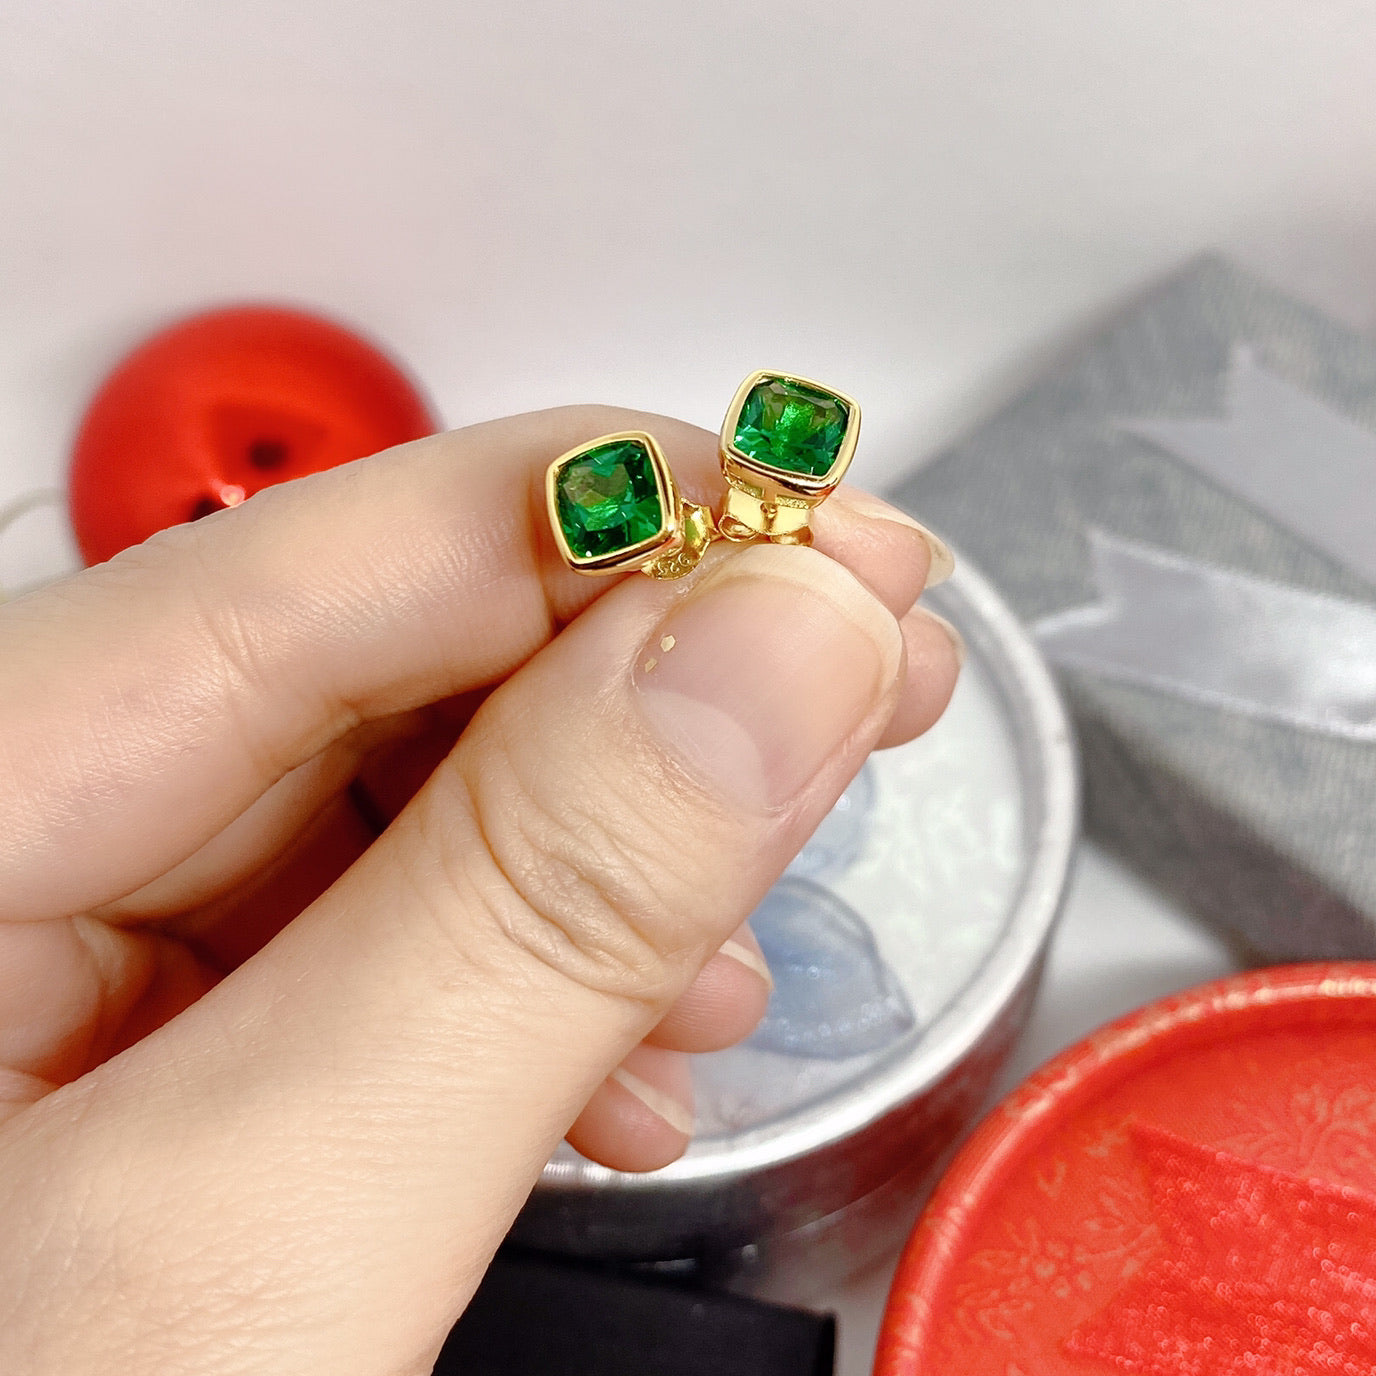 Gold & Emerald Earrings - May birthstone - Bieauli 